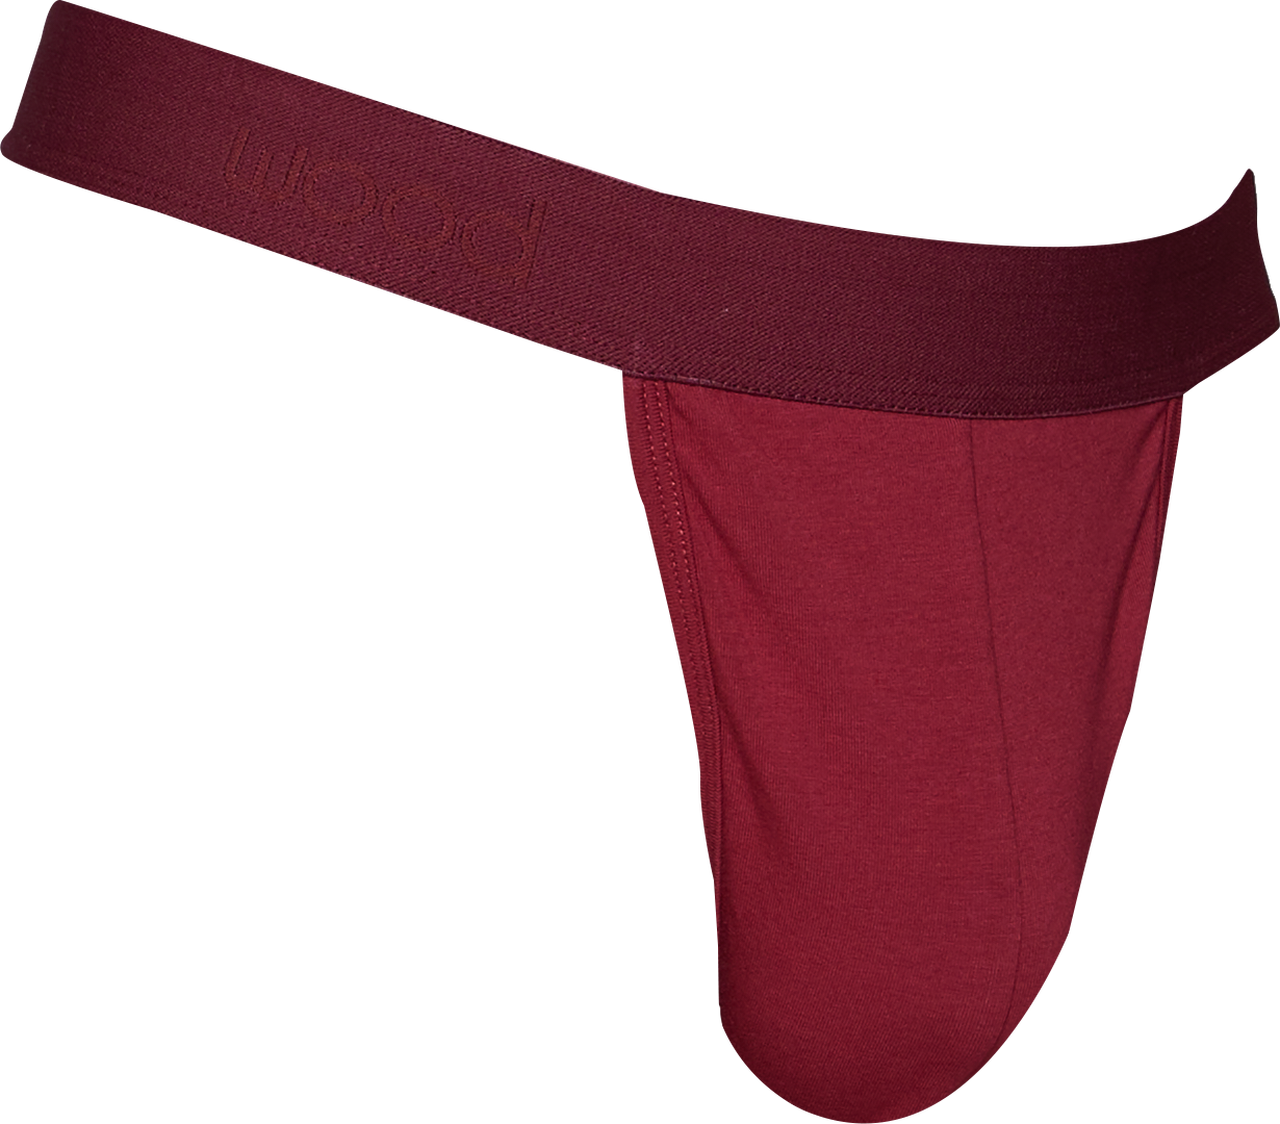 Thong in Burgundy by Wood Underwear